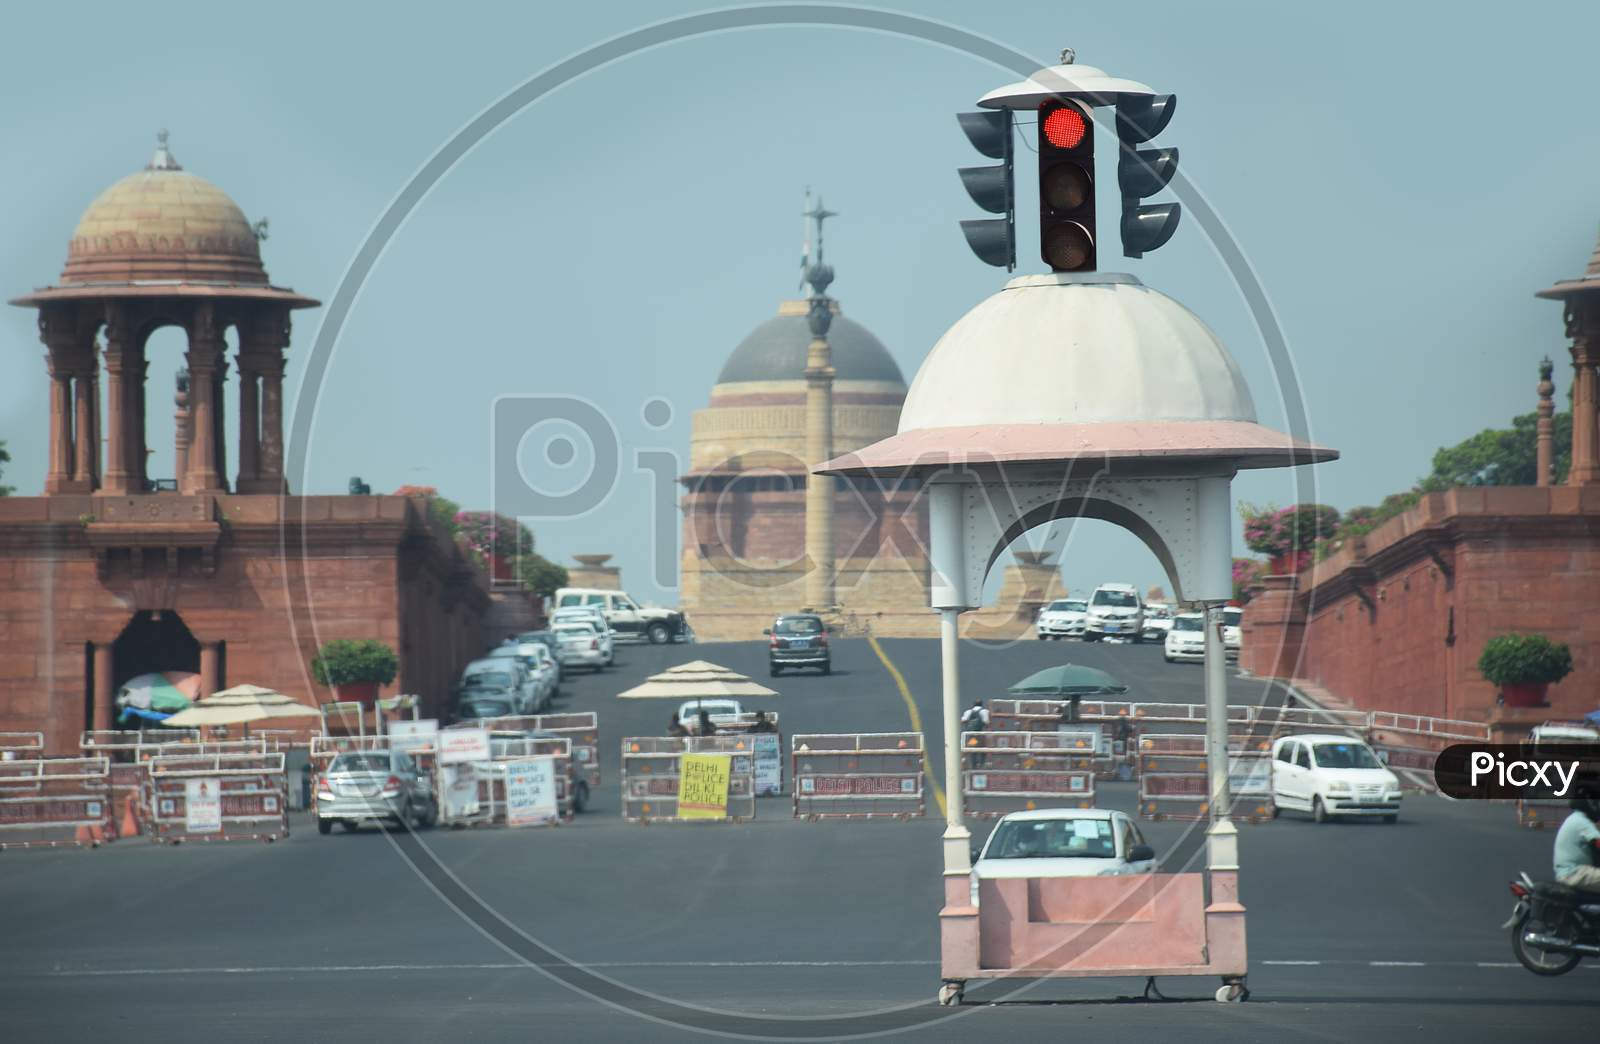 Indian Traffic Light